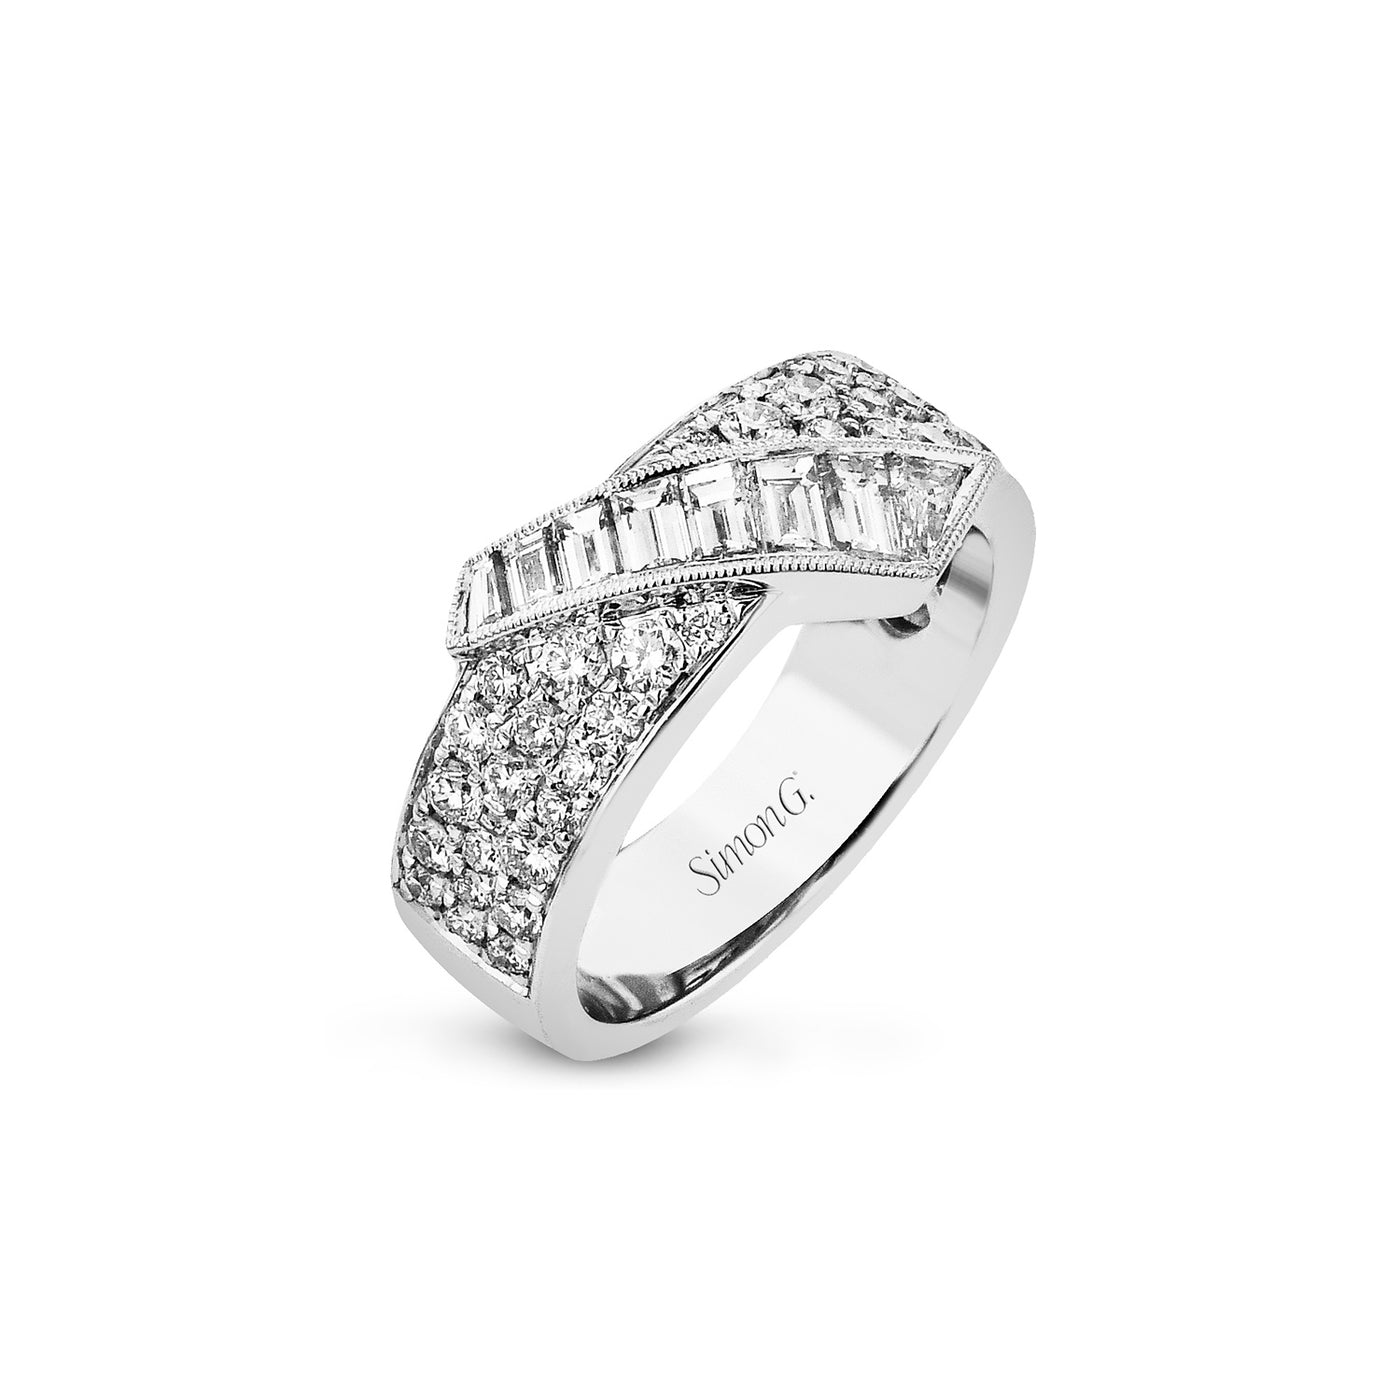 Simon G 18k White Gold Right Hand Diamond and Diamonds Fashion Ring – LR2032